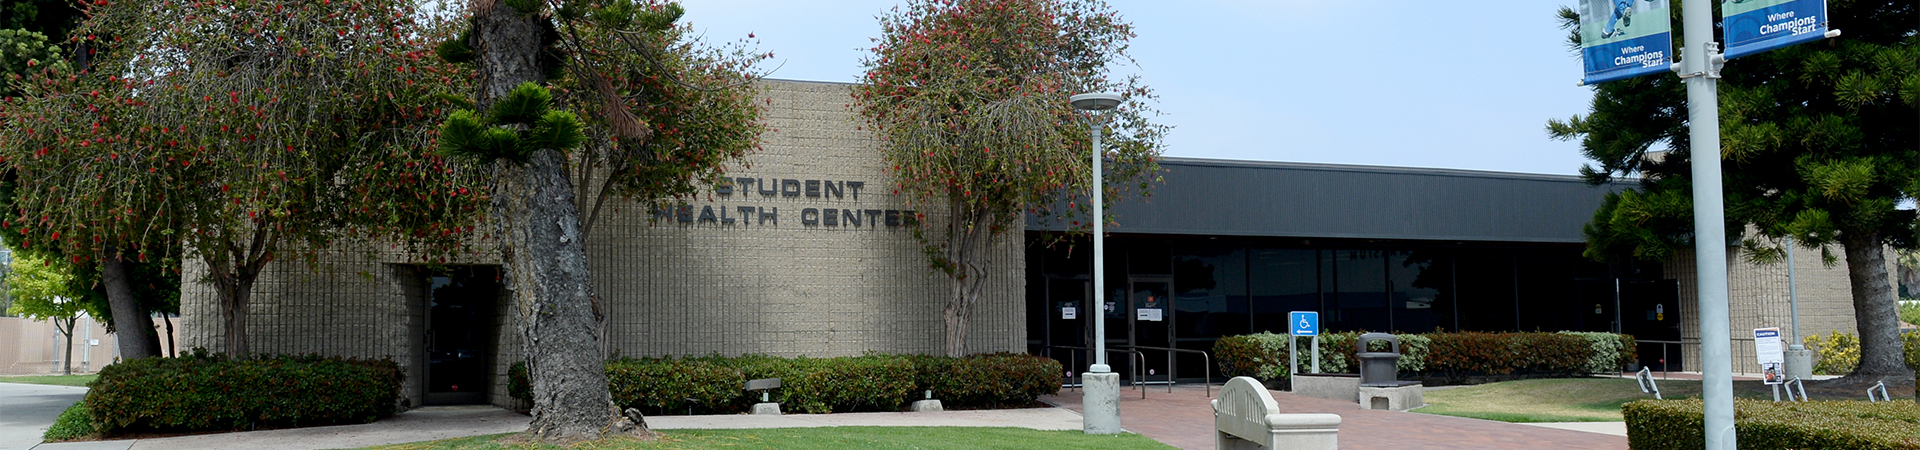 Student Health Center building